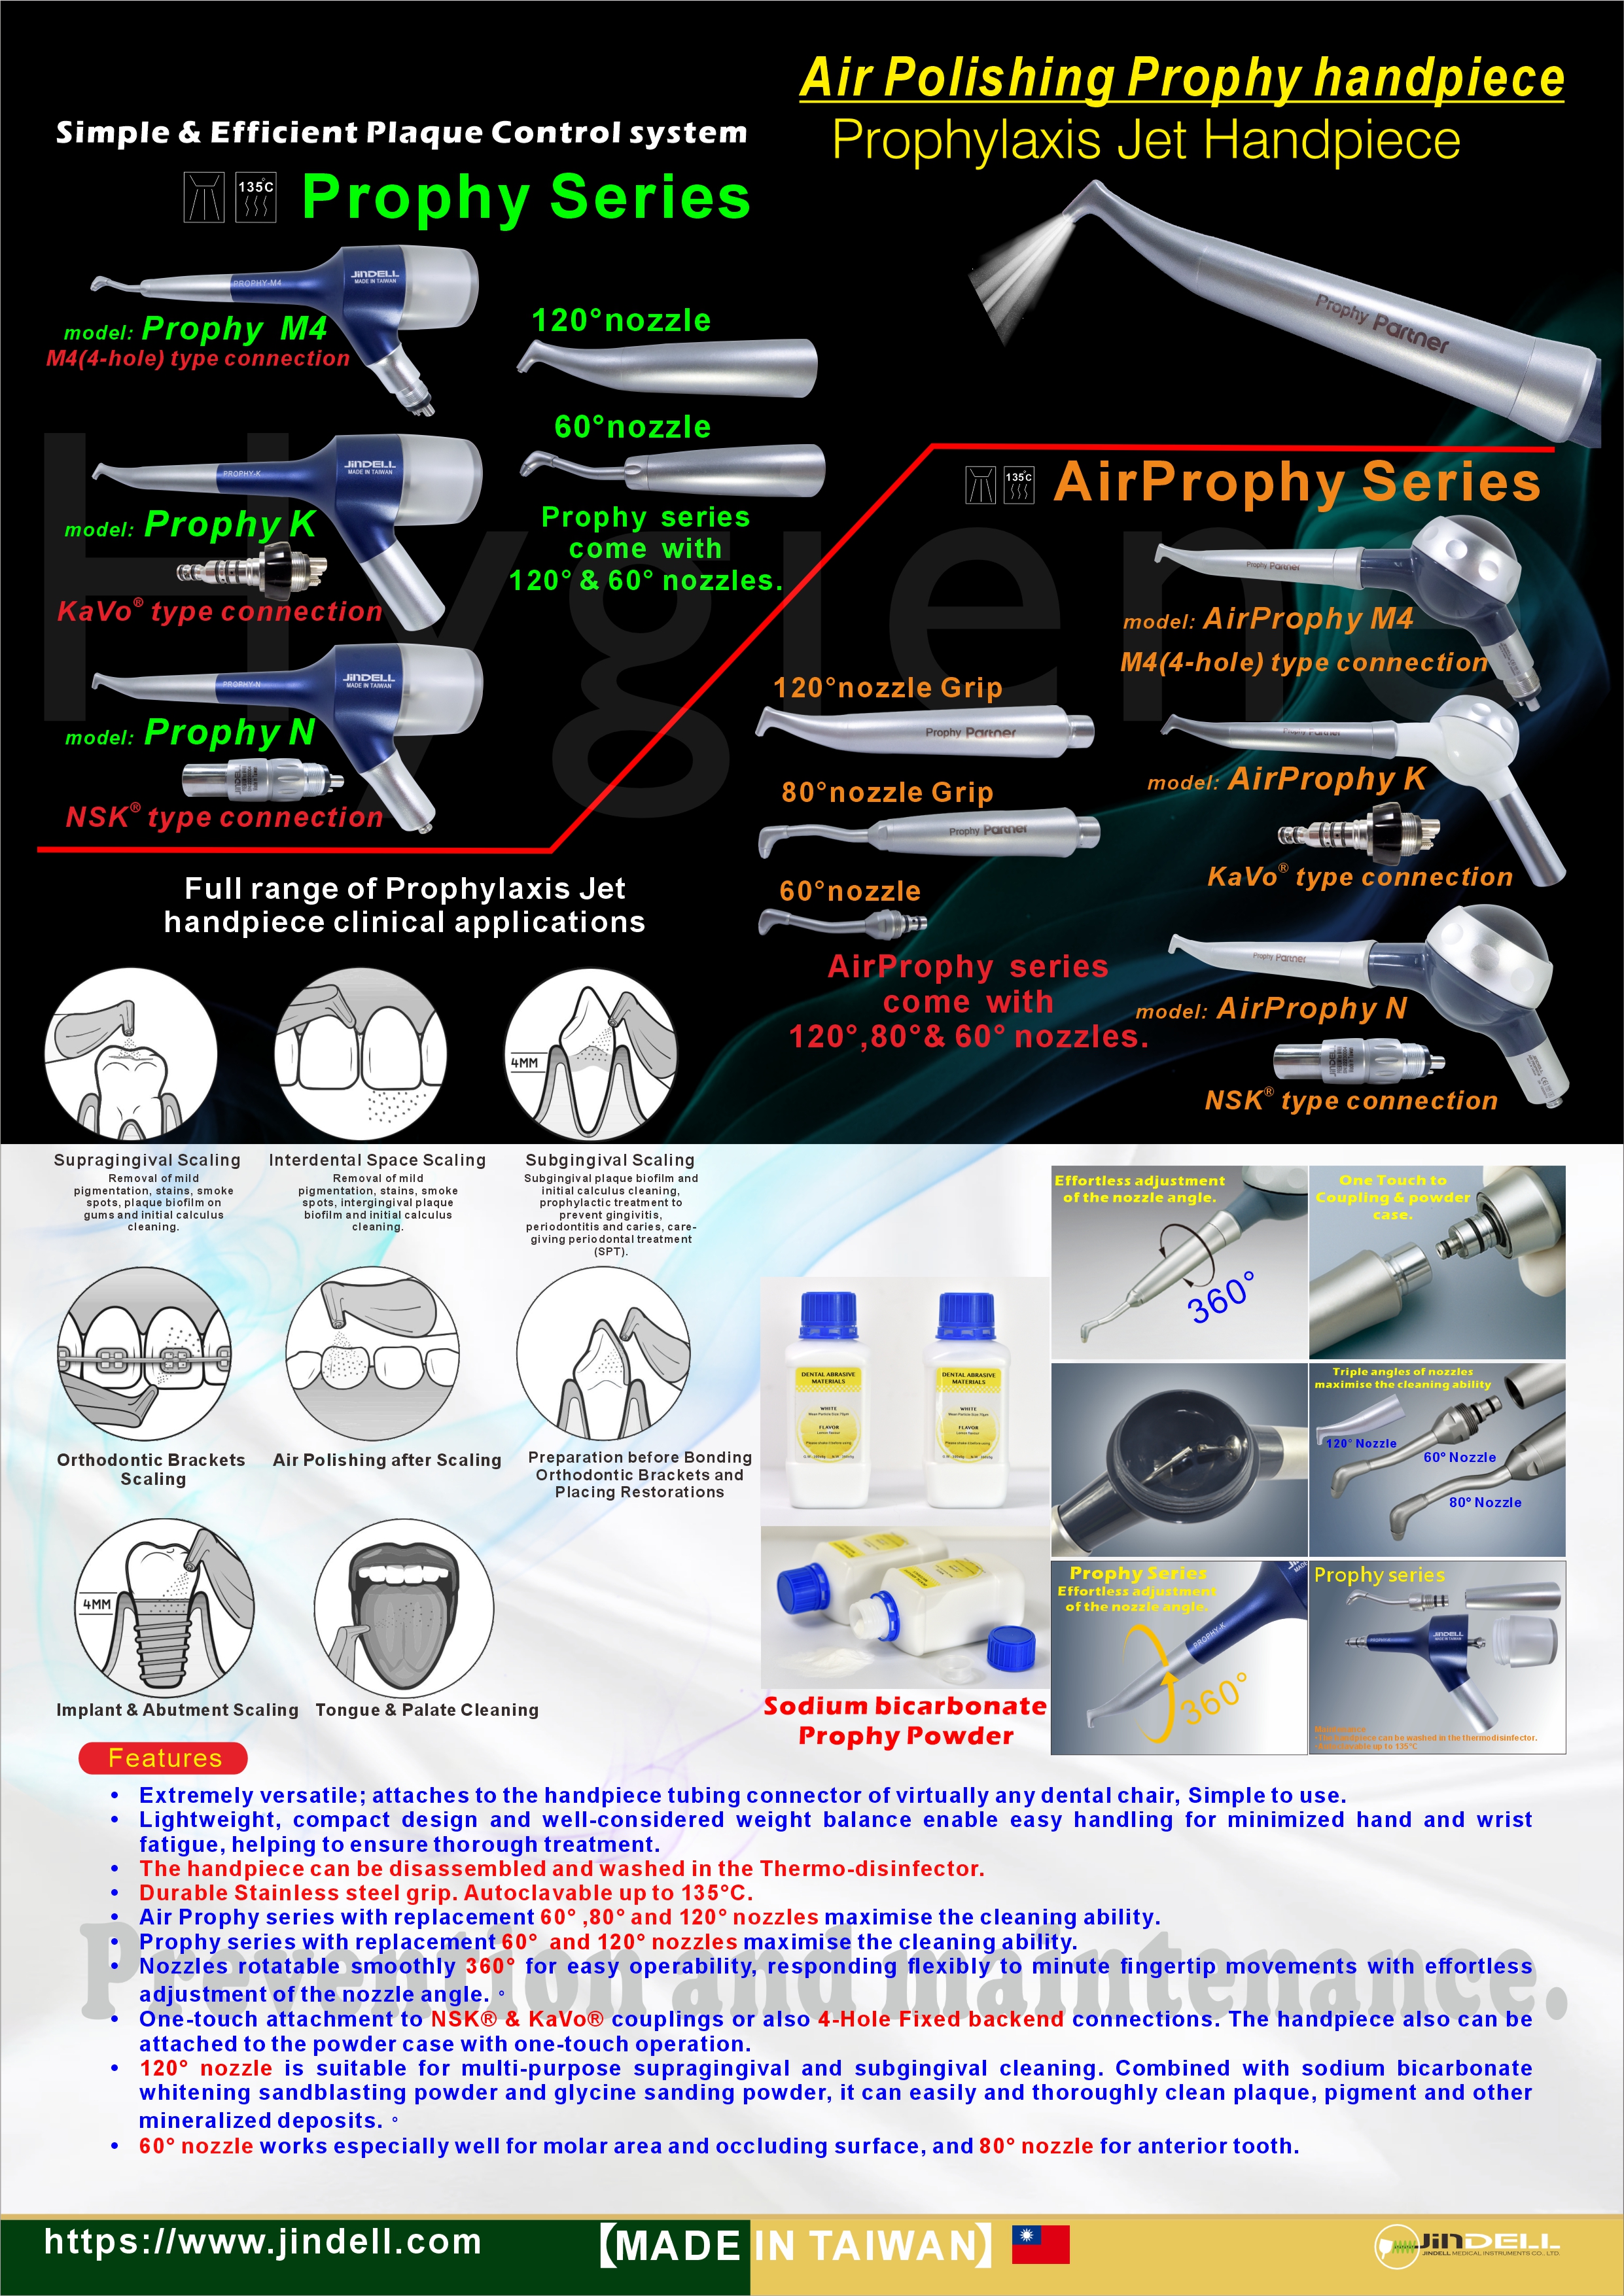 Air Polishing Prophylaxis Jet handpiece